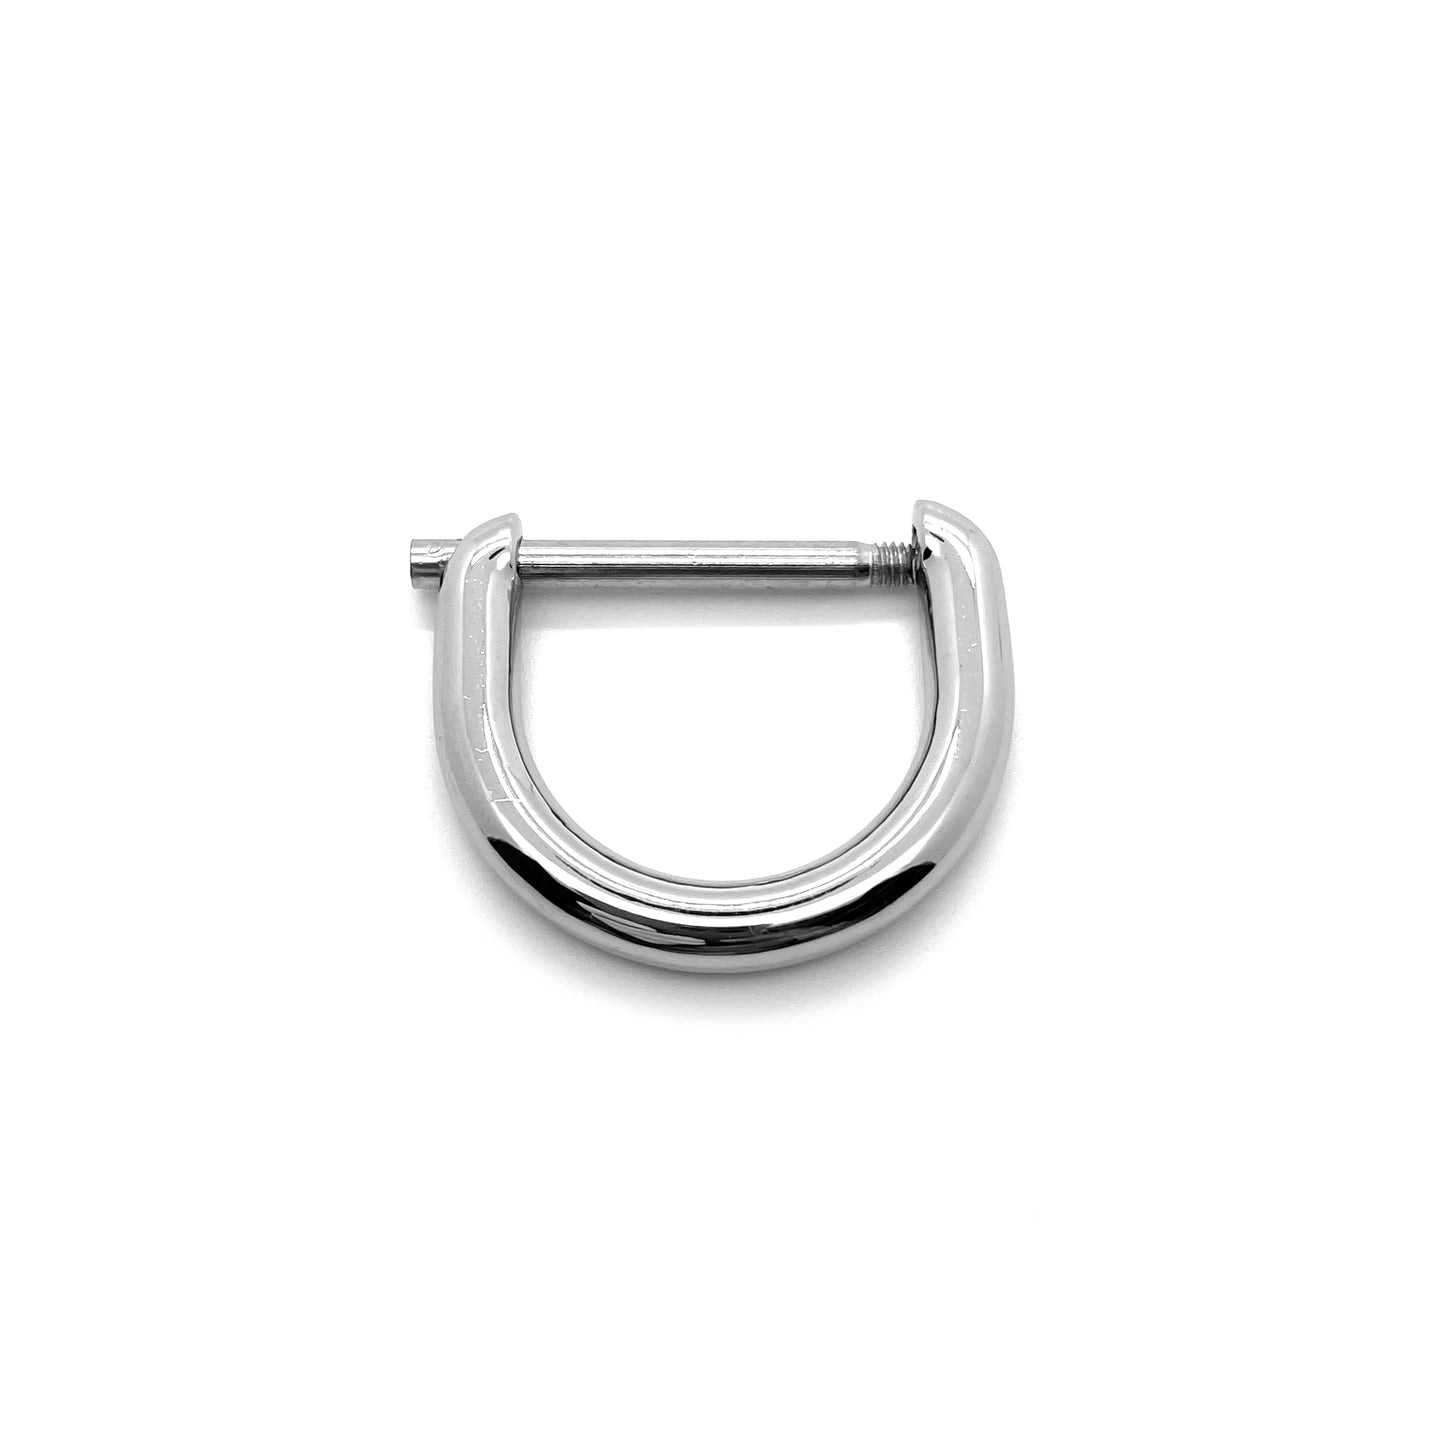 D-Ring (1 pair)